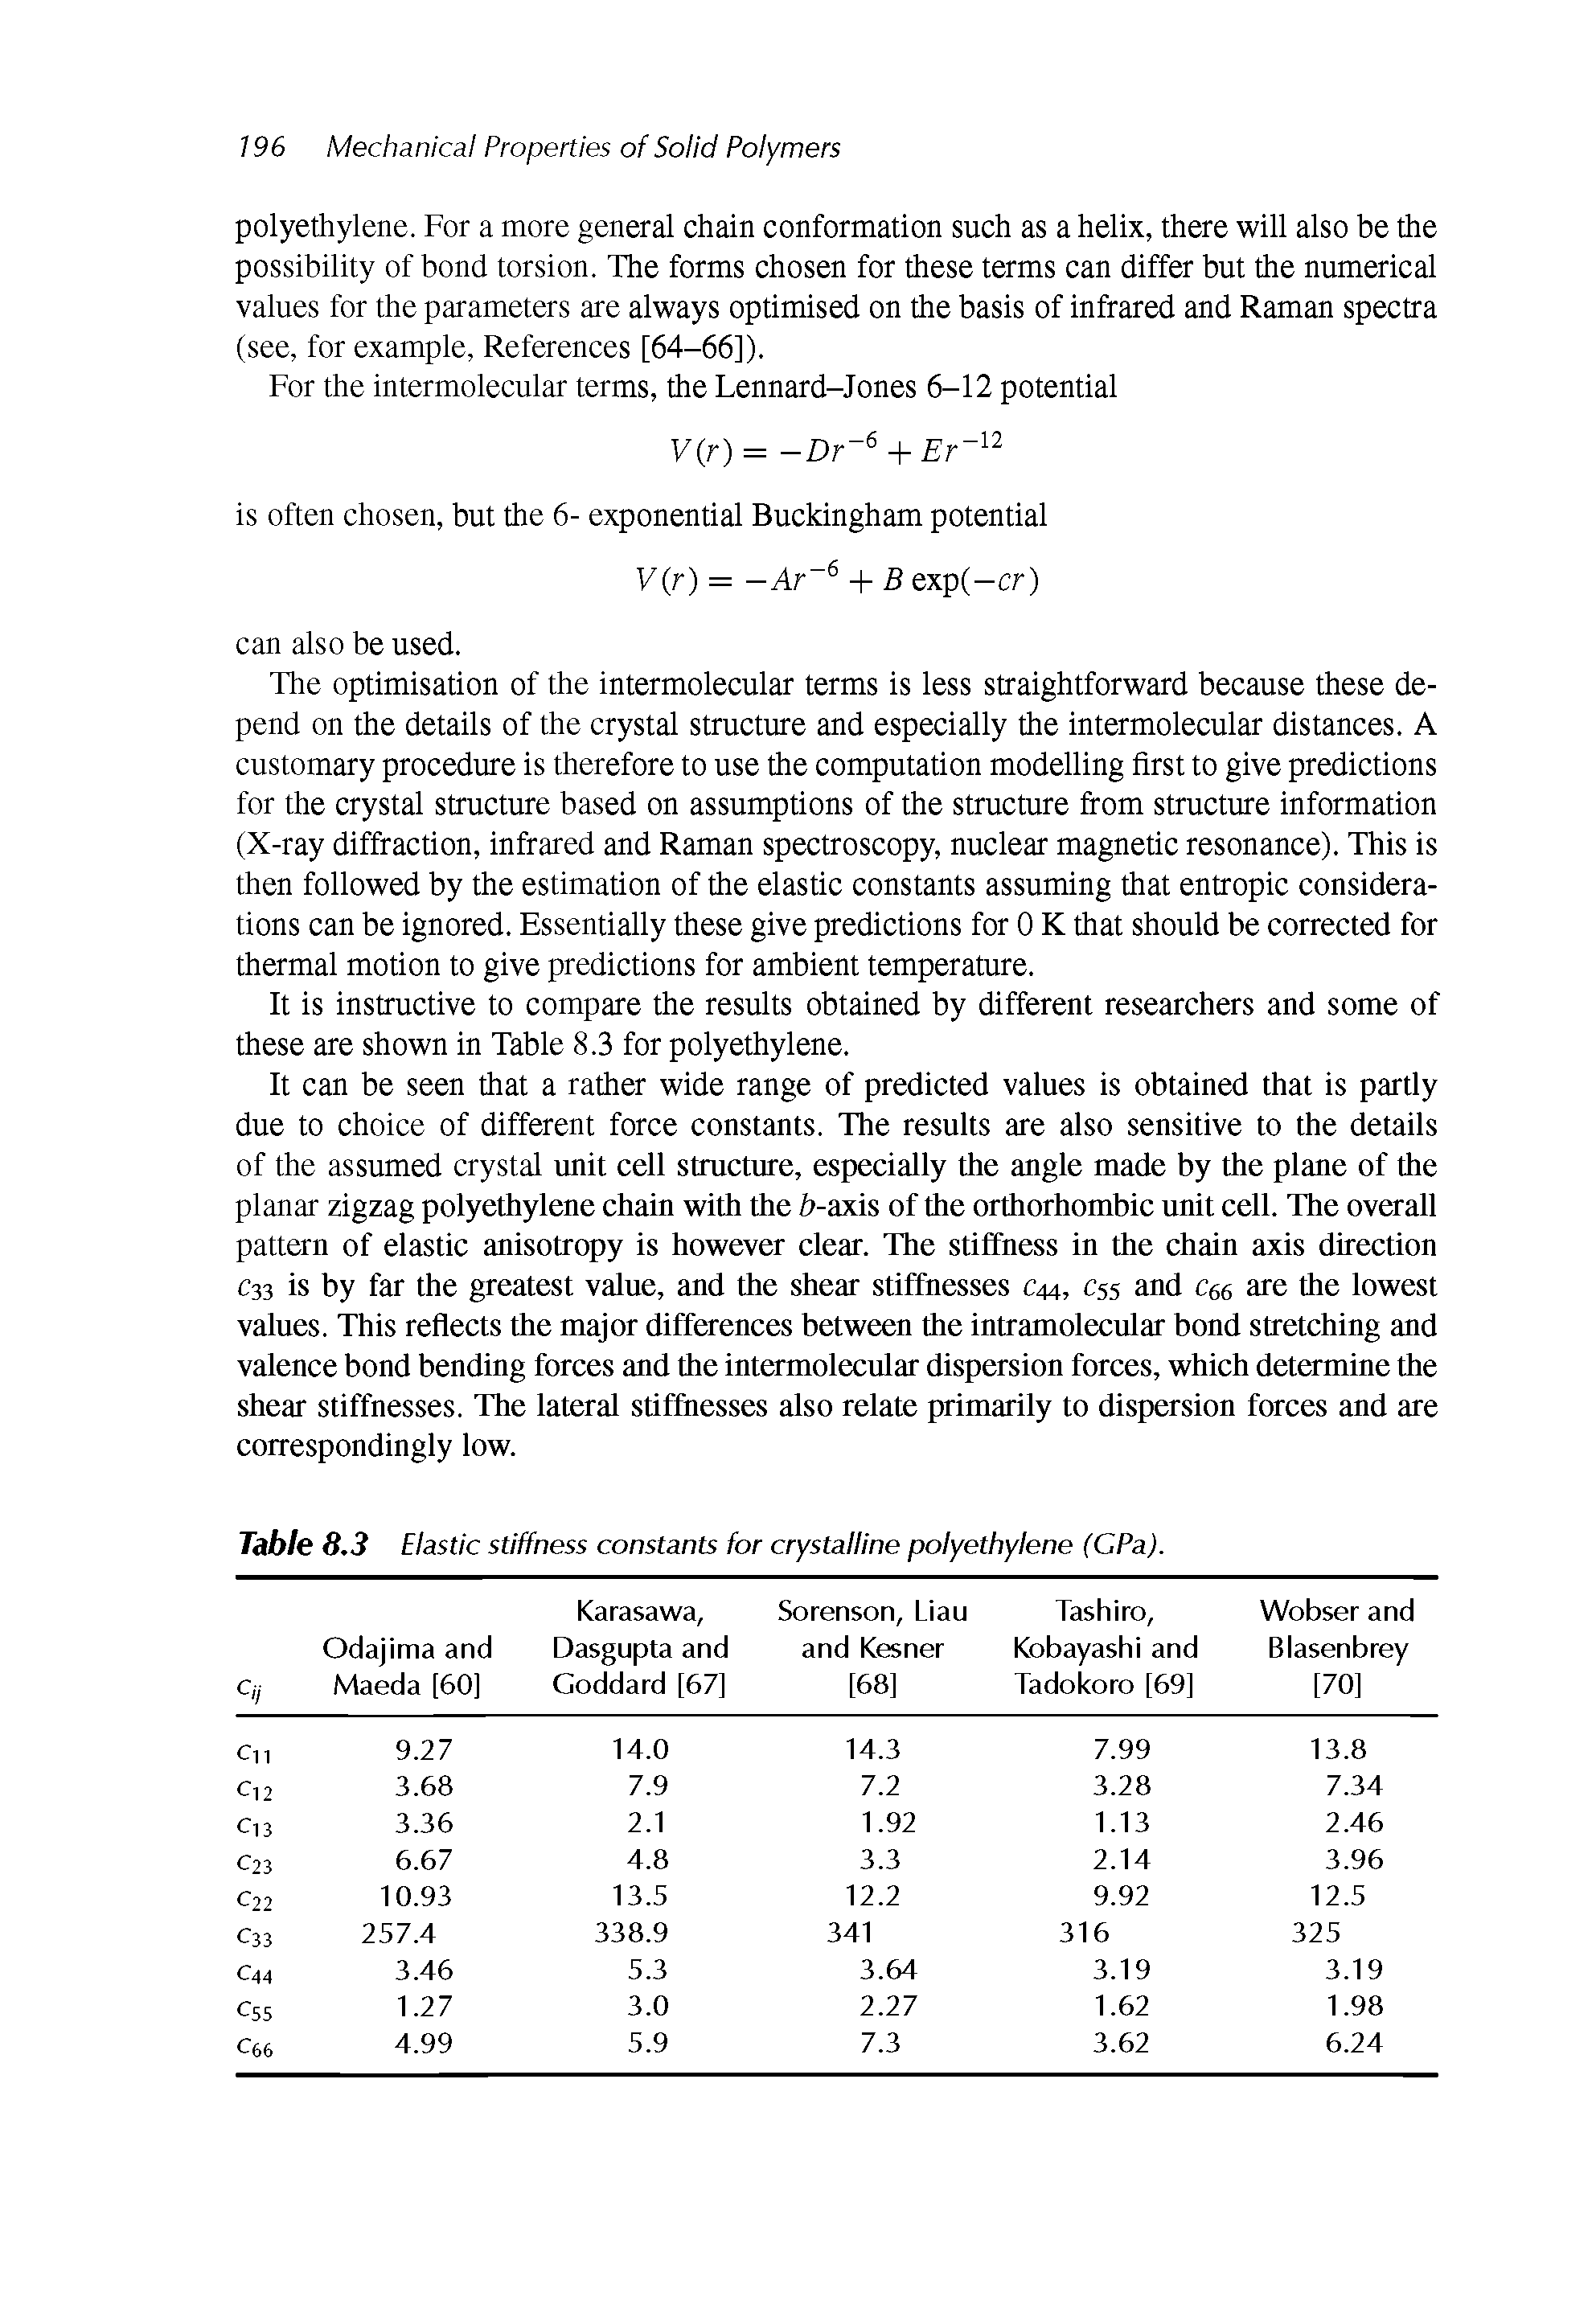 Table 8.3 Elastic stiffness constants for crystaJline polyethylene (CPa).